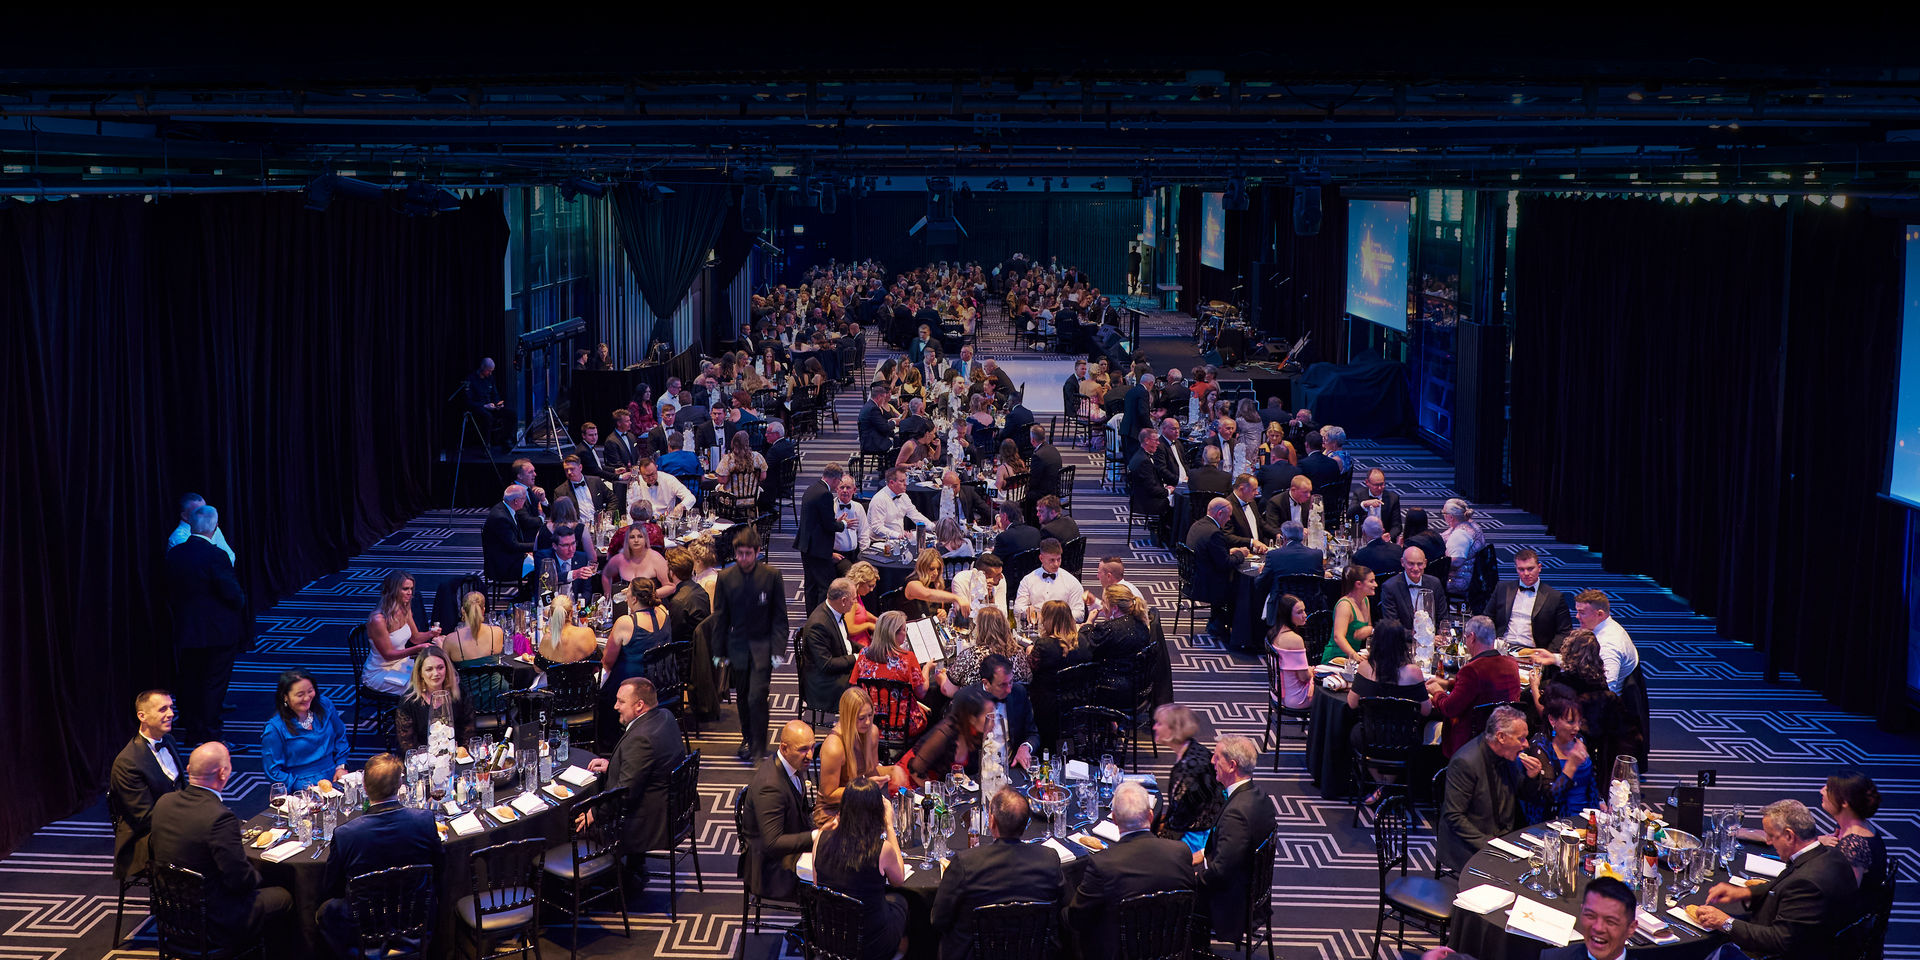 Gala Dinner Awards Photographers Sydney. Video and Photos by orlandosydney.com